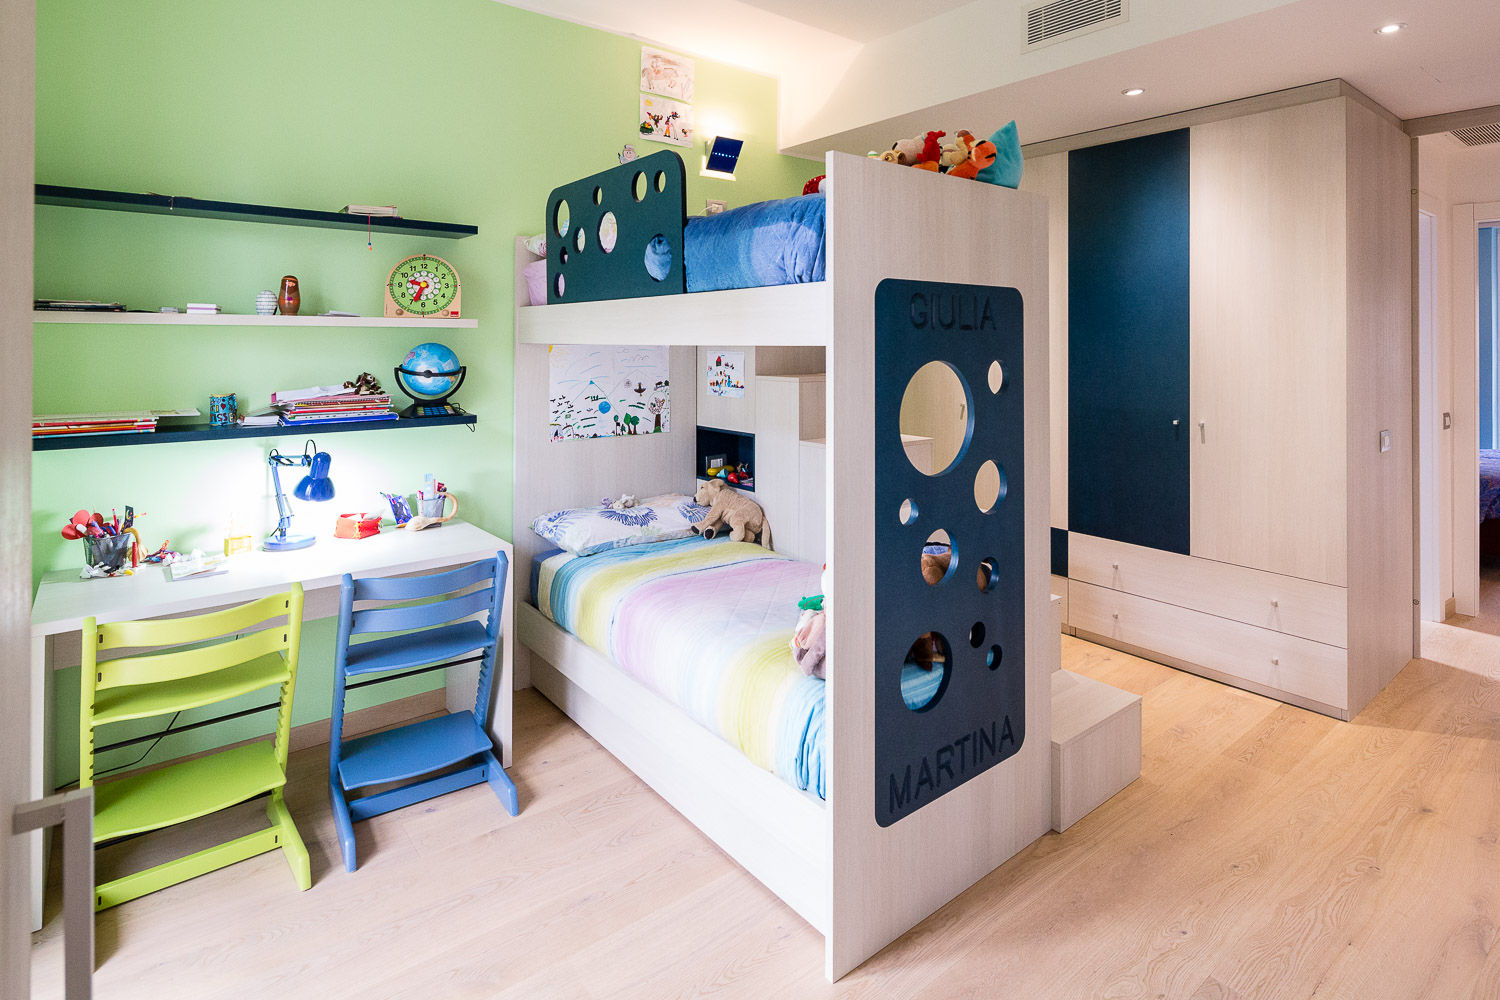 Five LIttle pigs, 23bassi studio di architettura 23bassi studio di architettura Dormitorios infantiles modernos: